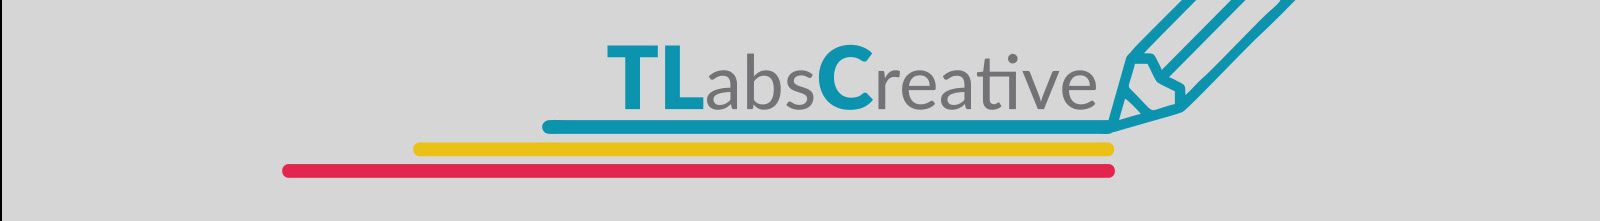 T Labs Creative's profile banner